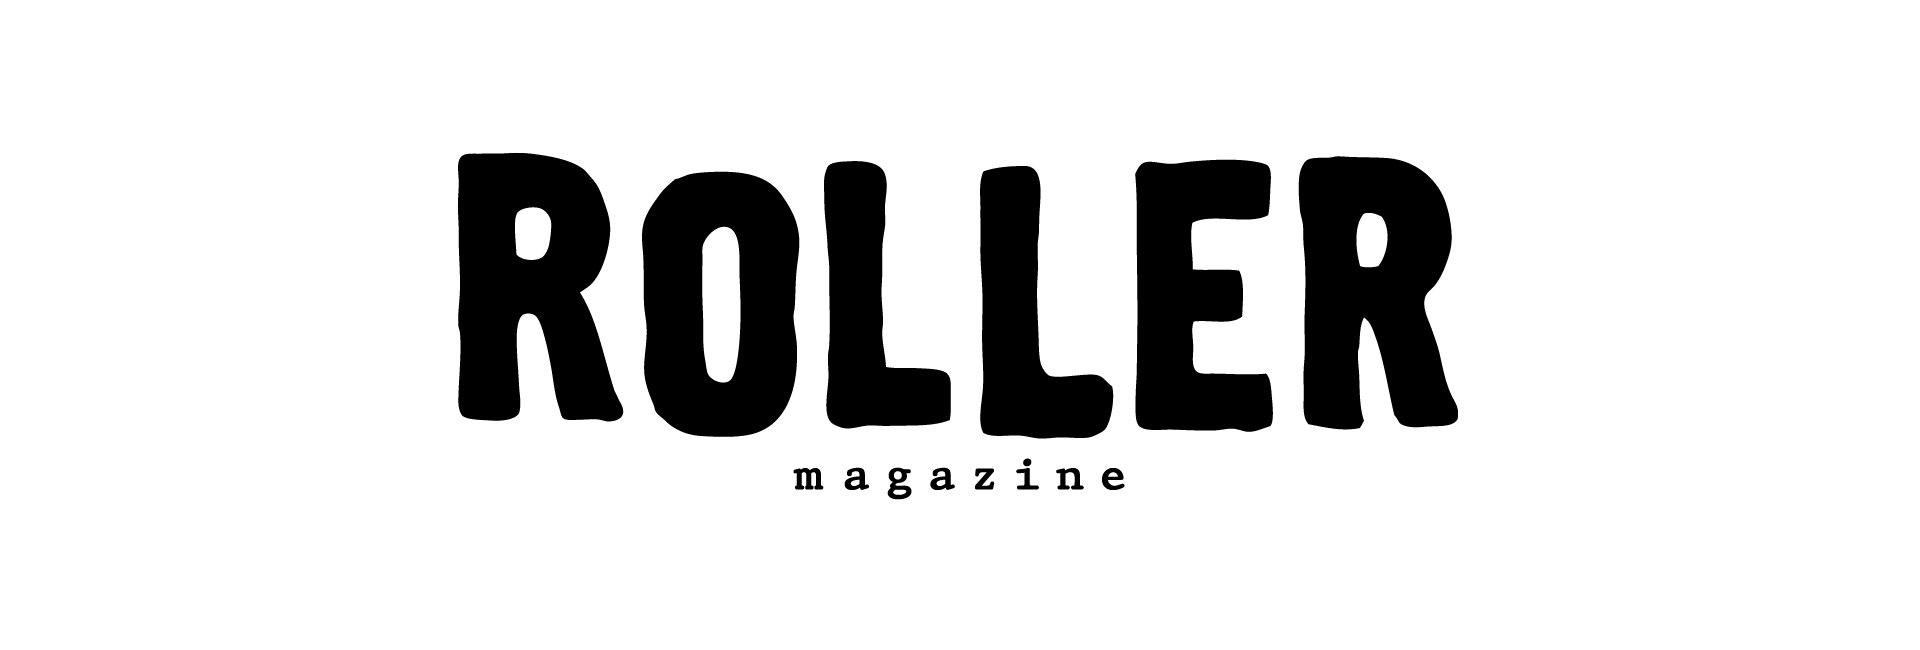 ROLLER magazine(ローラーマガジン) - CANVAS CLOTHING ONLINE STORE 